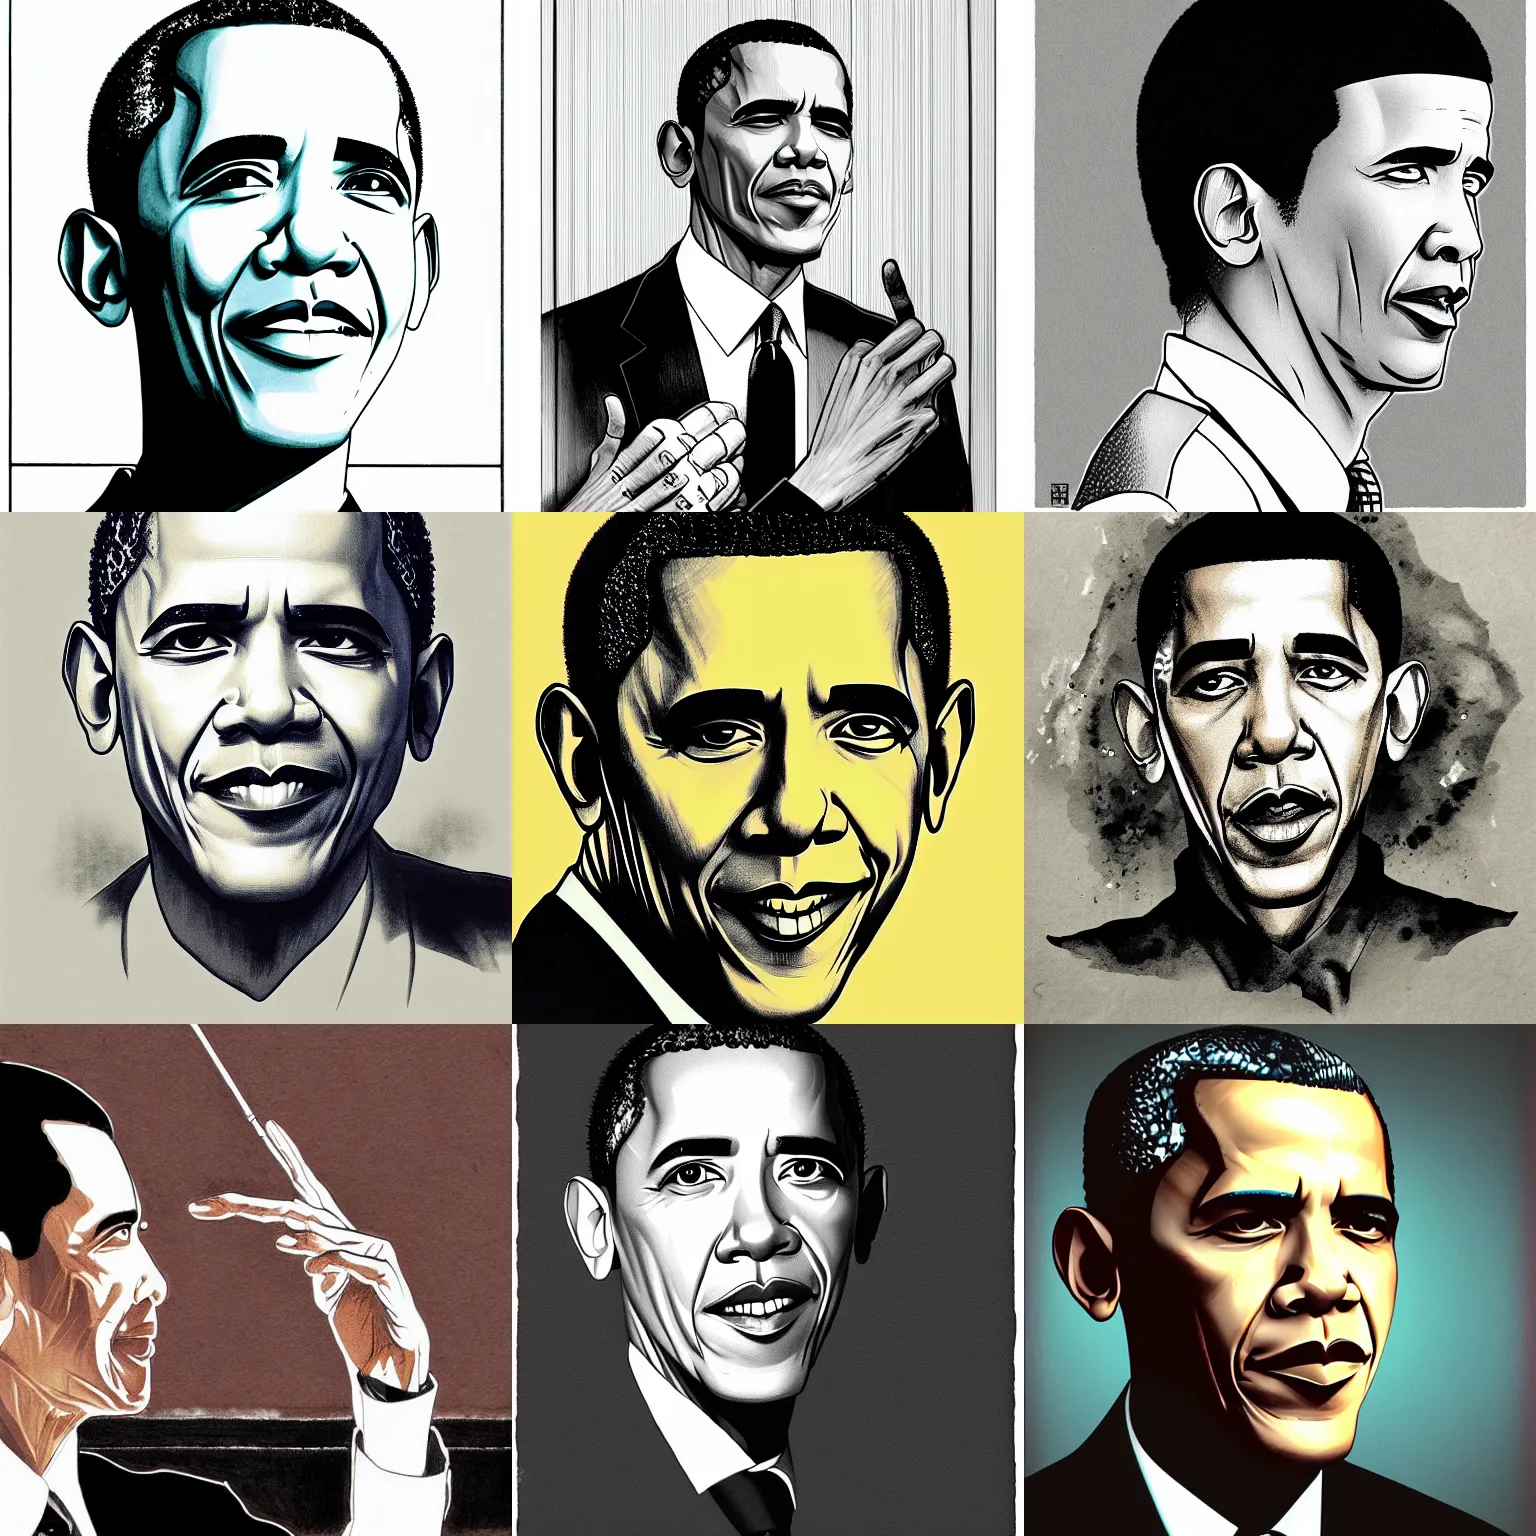 Prompt: Obama illustration by Takehiko Inoue, cinematic